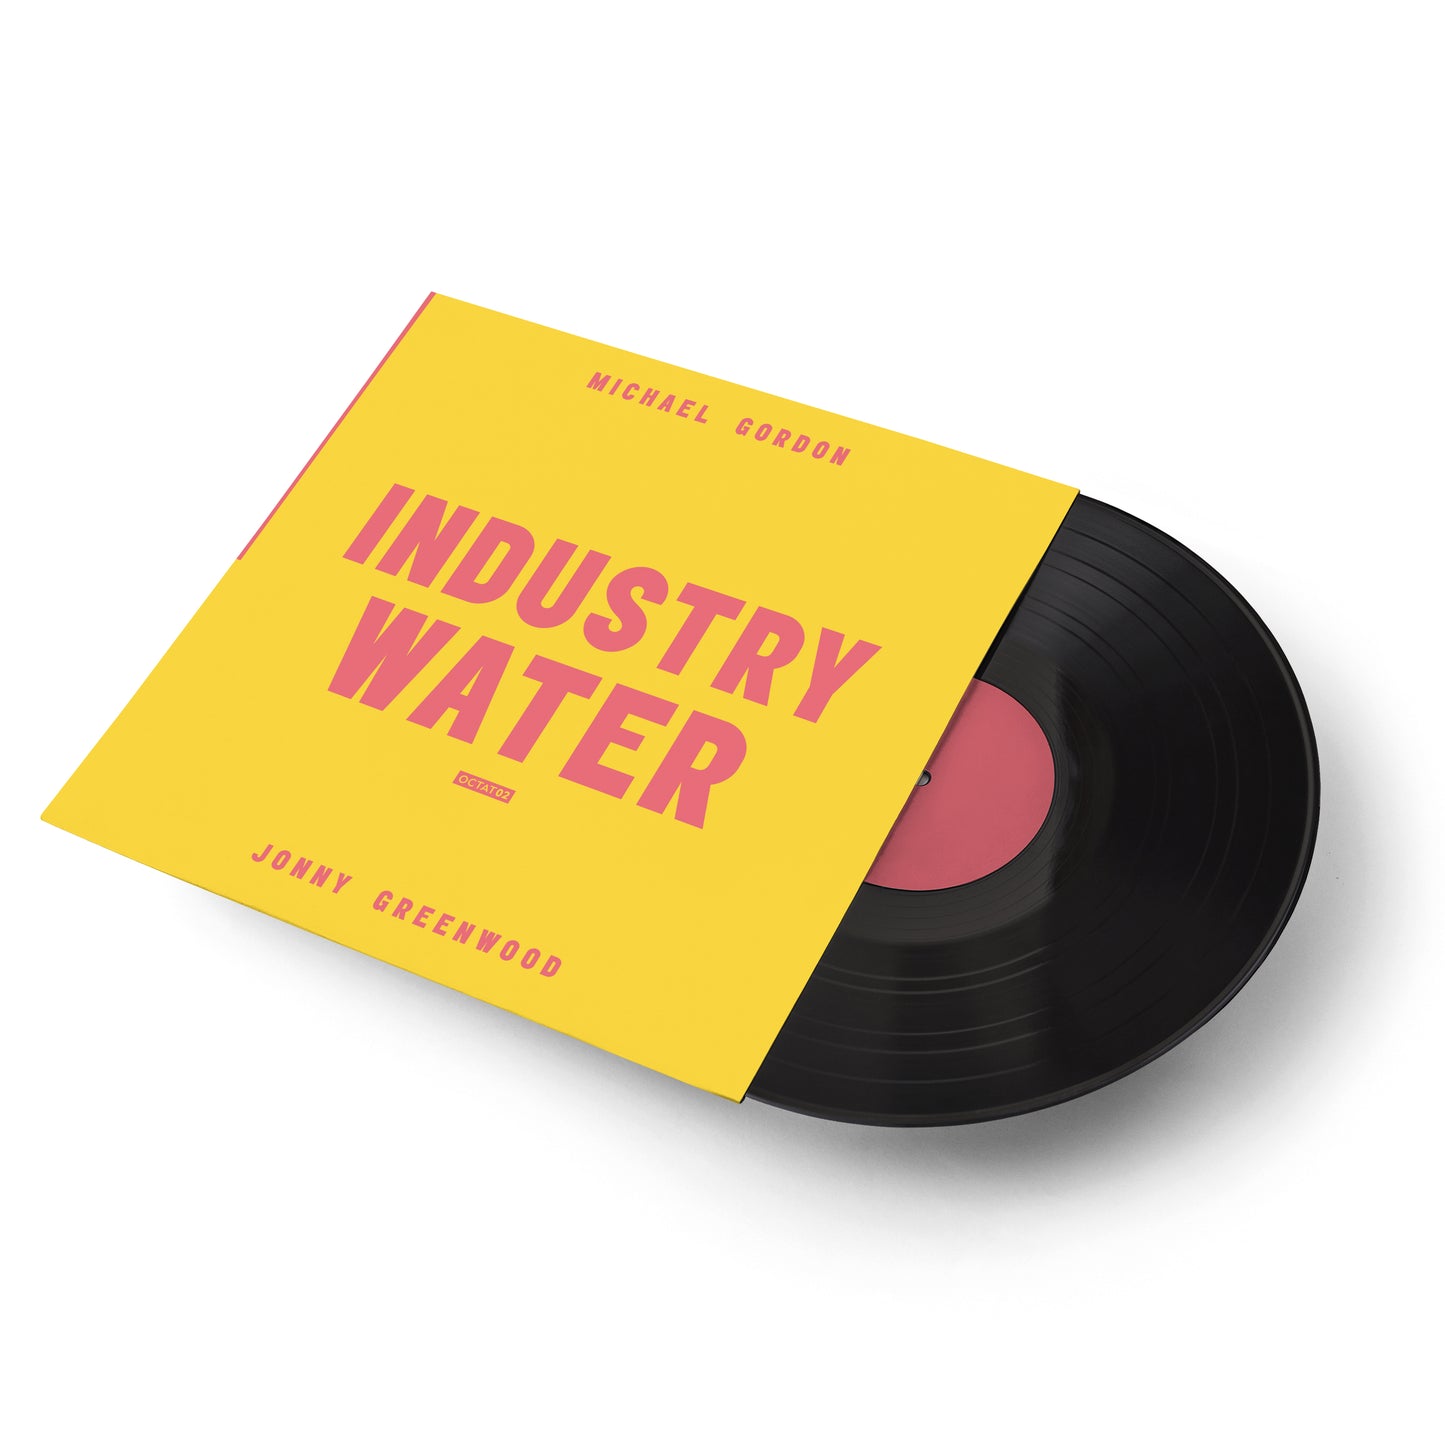 Volume 2: Industry, Water - Vinyl